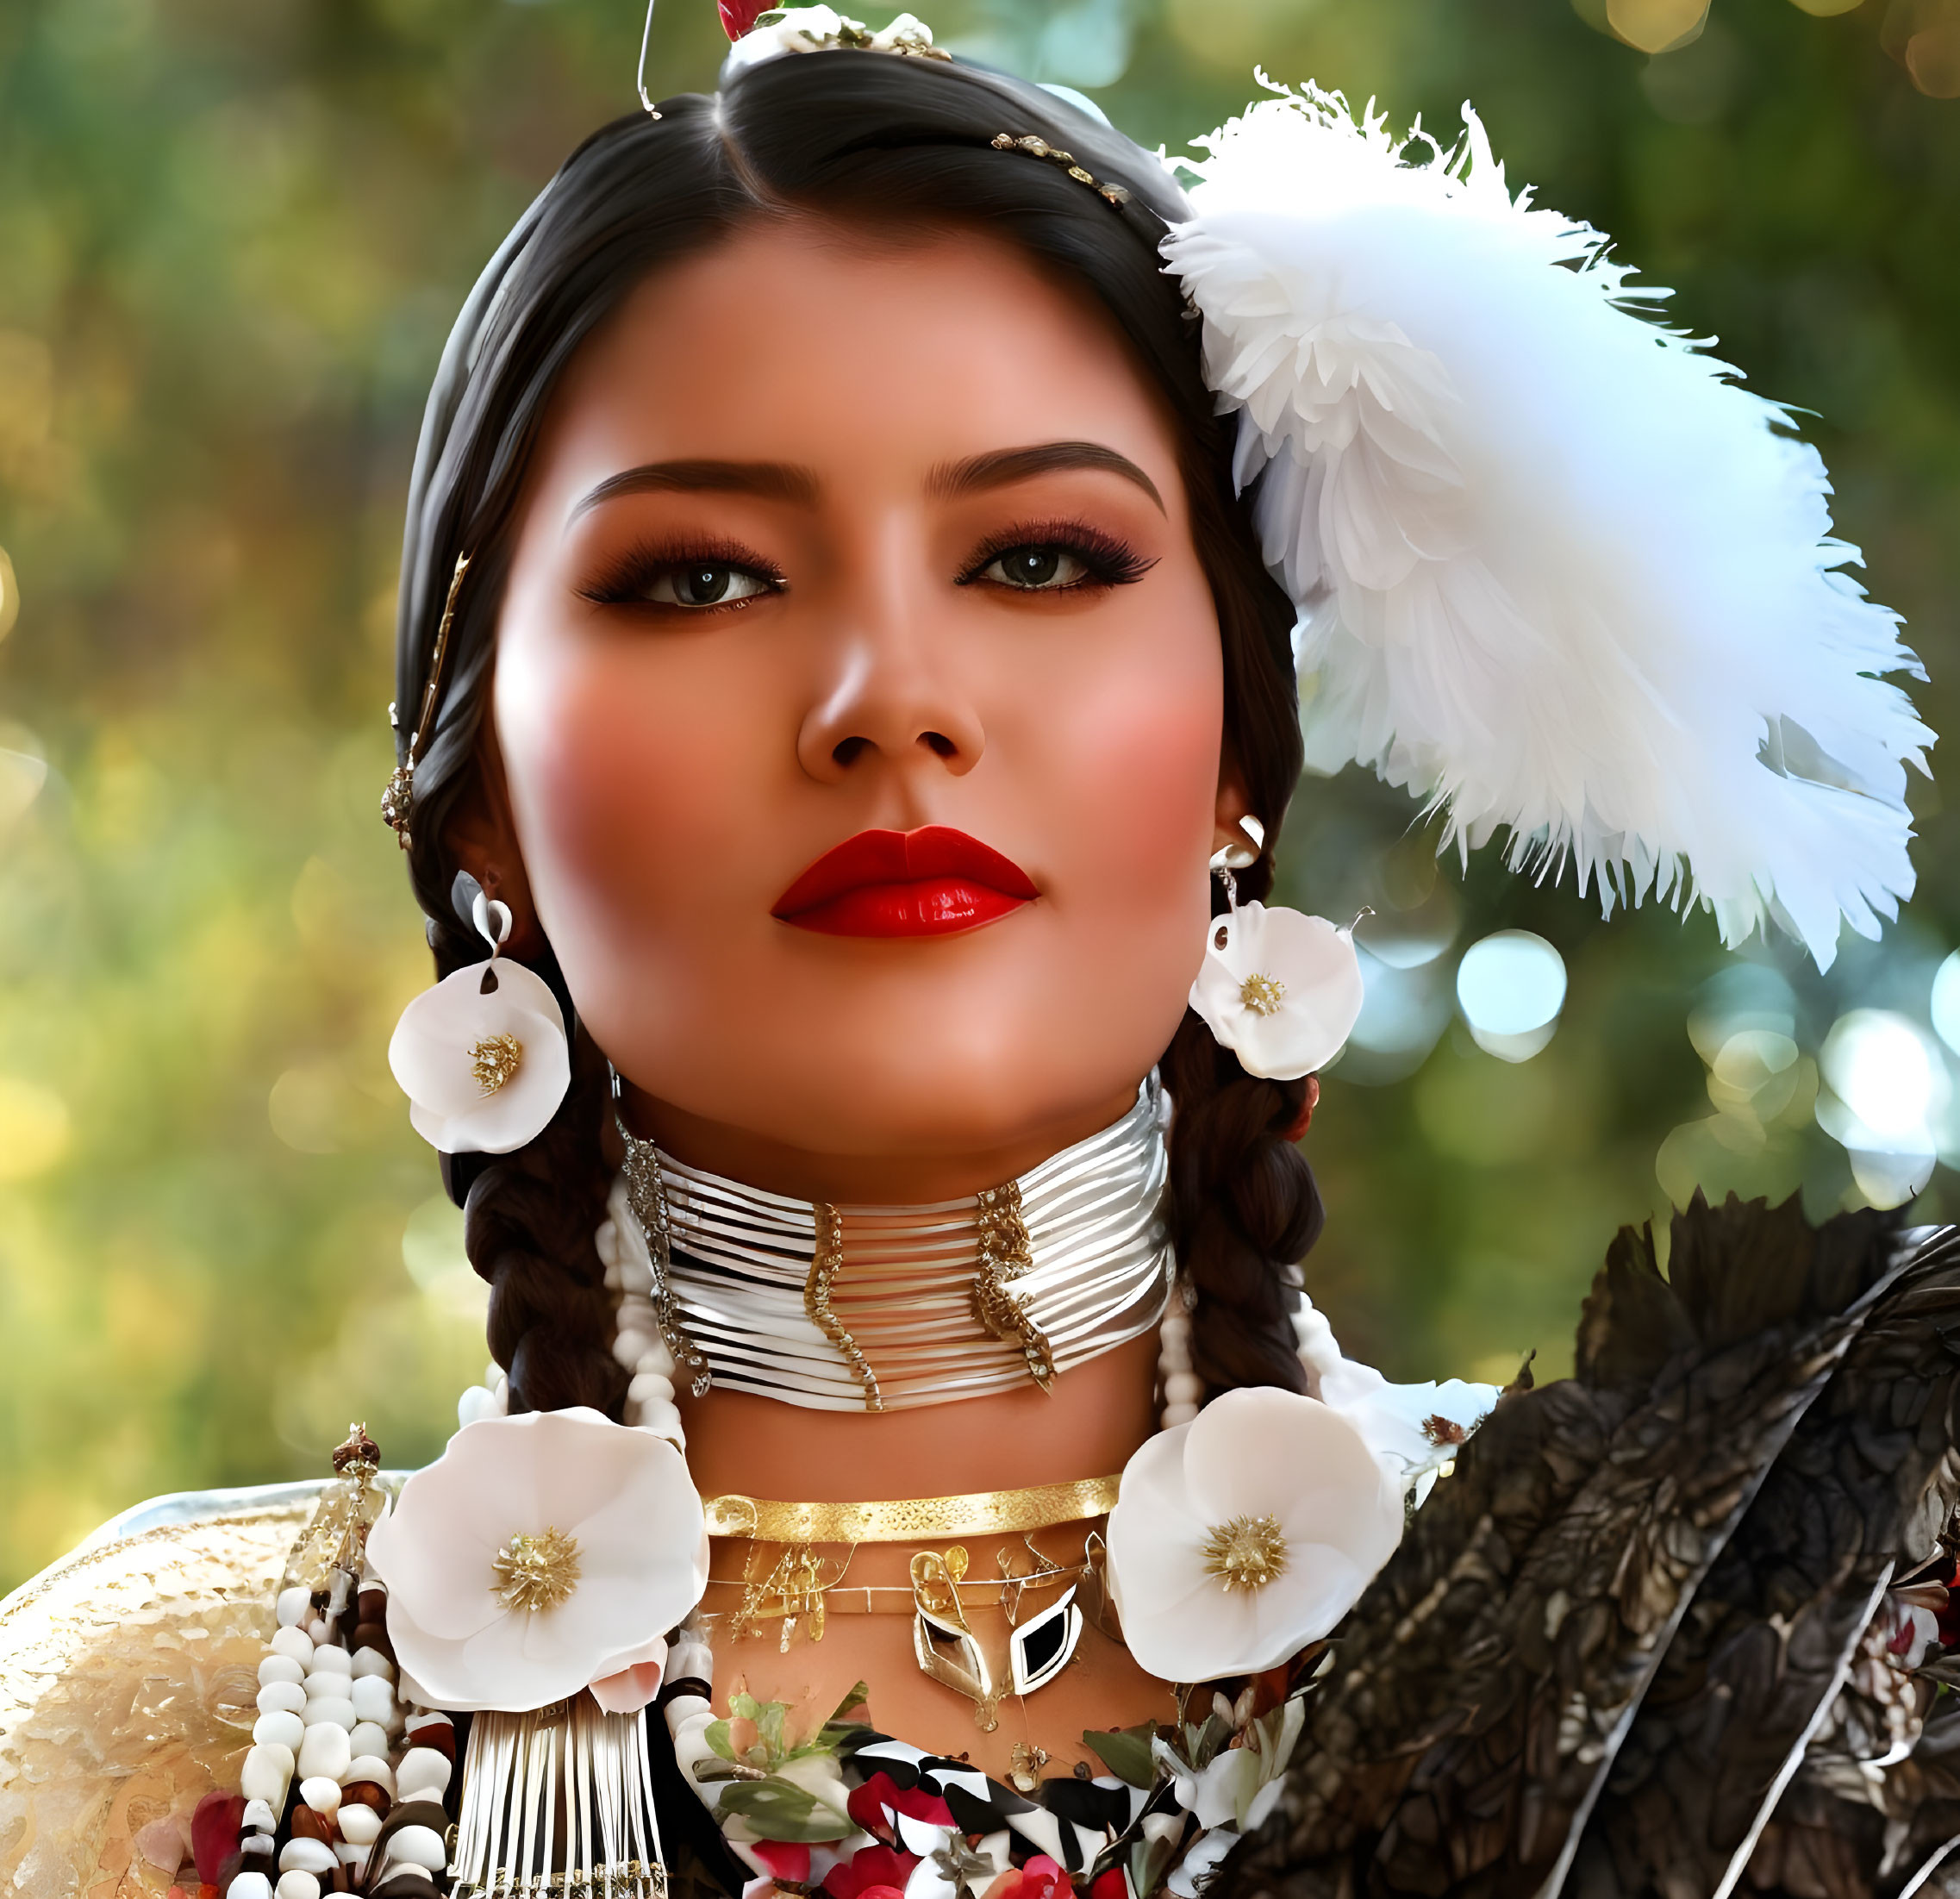 American native woman